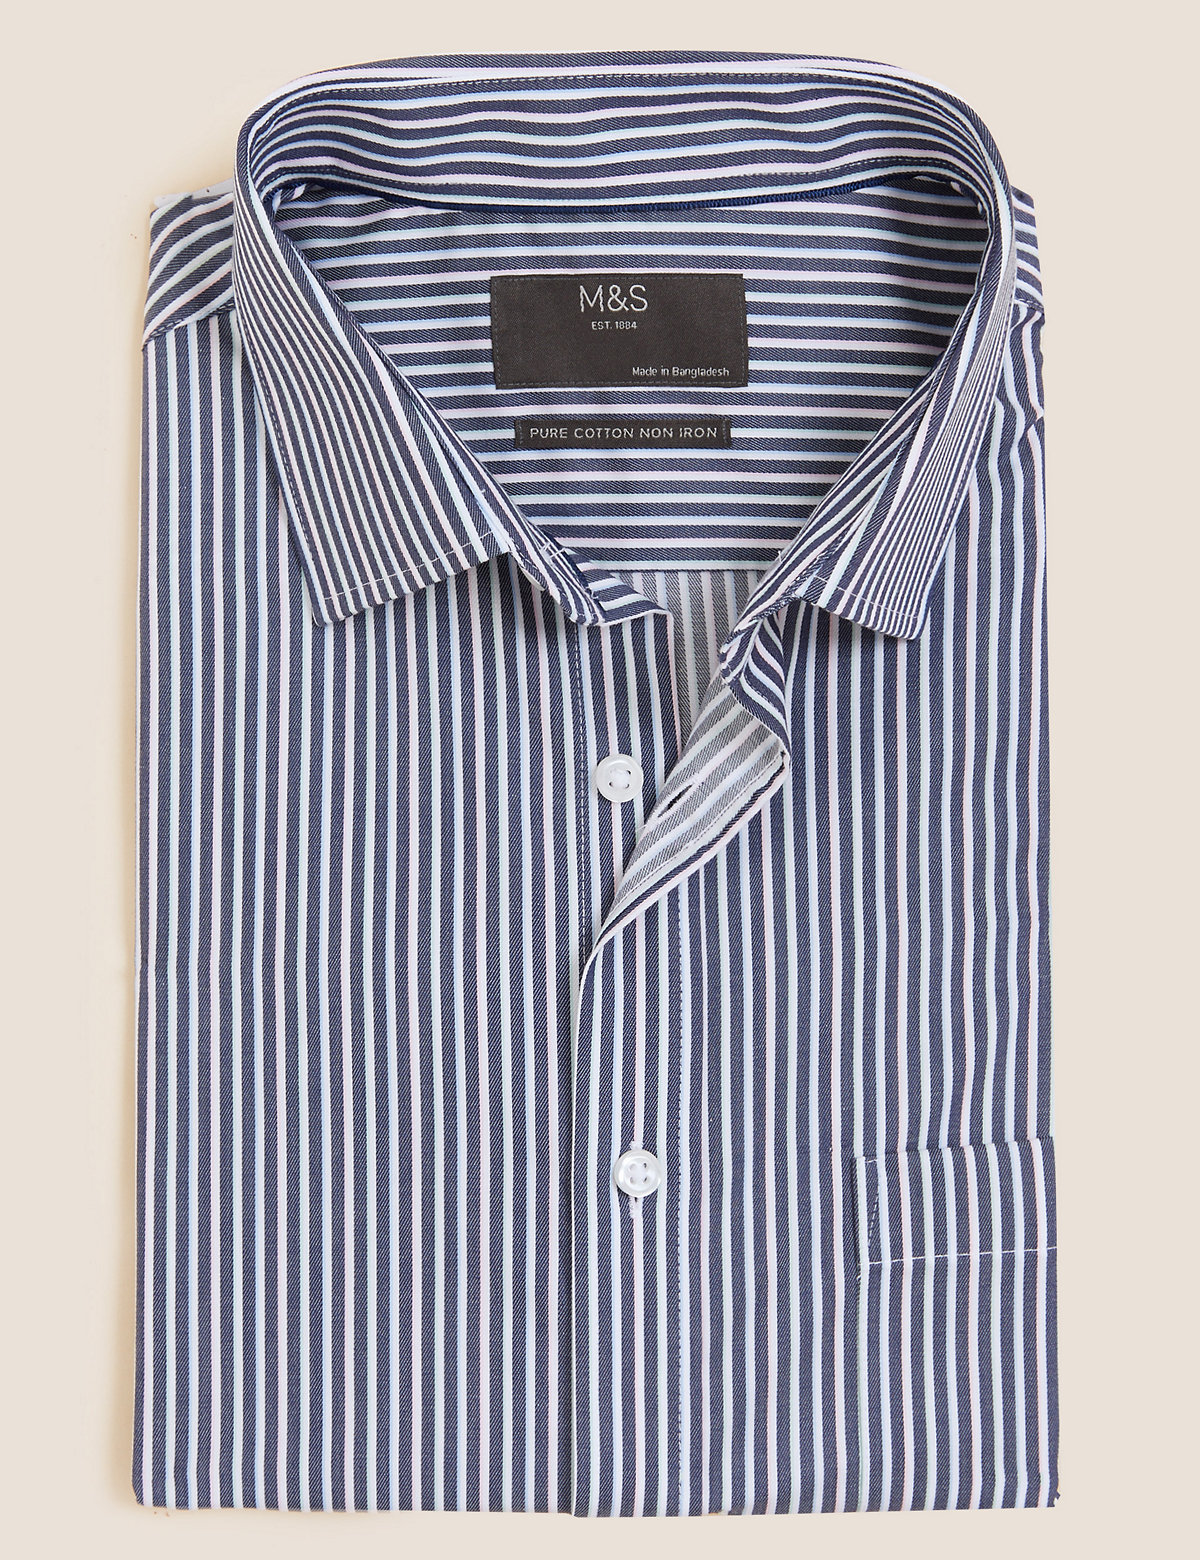 Regular Fit Pure Cotton Striped Short Sleeve Shirt